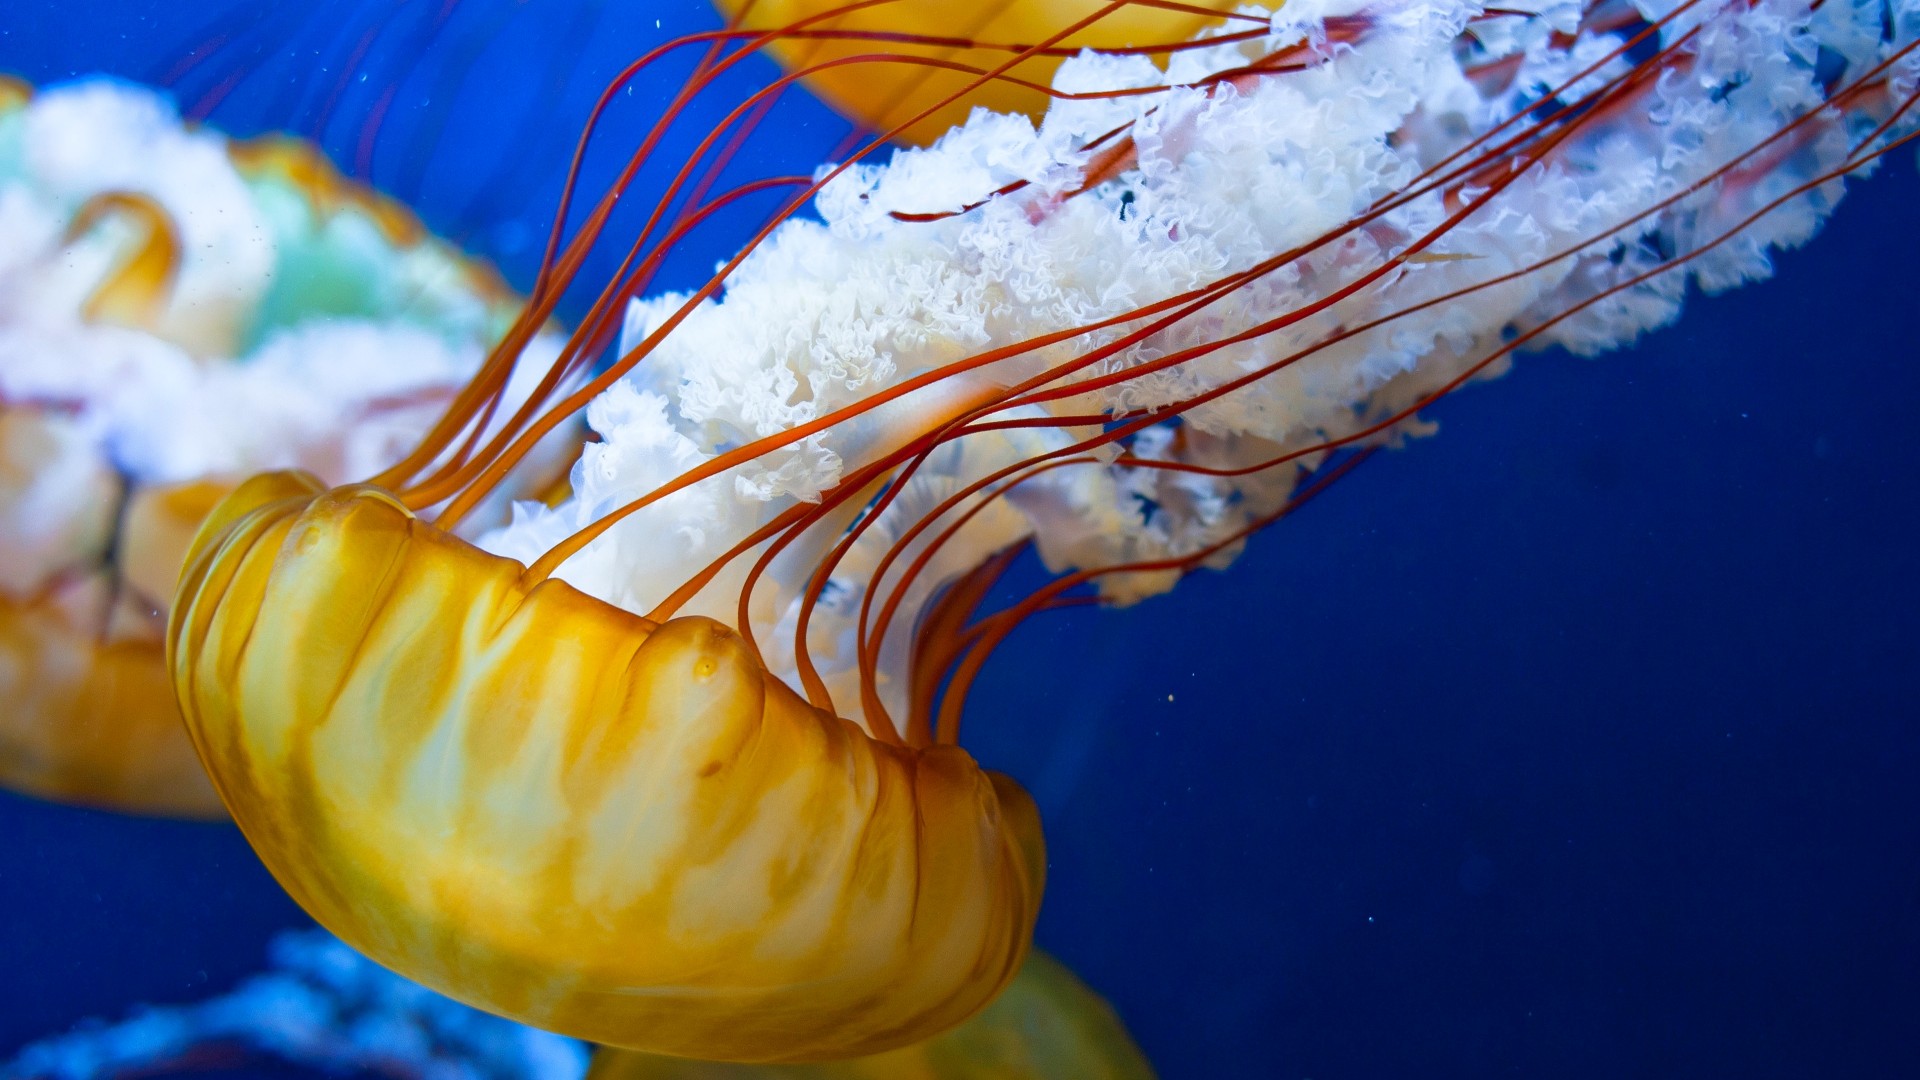 Японская медуза, 4k, 5k, медуза, море, Атлантический, Тихий океан, вода, желтая, Japanese Sea-Nettle, 4k, 5k wallpaper, Pacific Ocean, Jellyfish, sea, atlantic, water, yellow (horizontal)